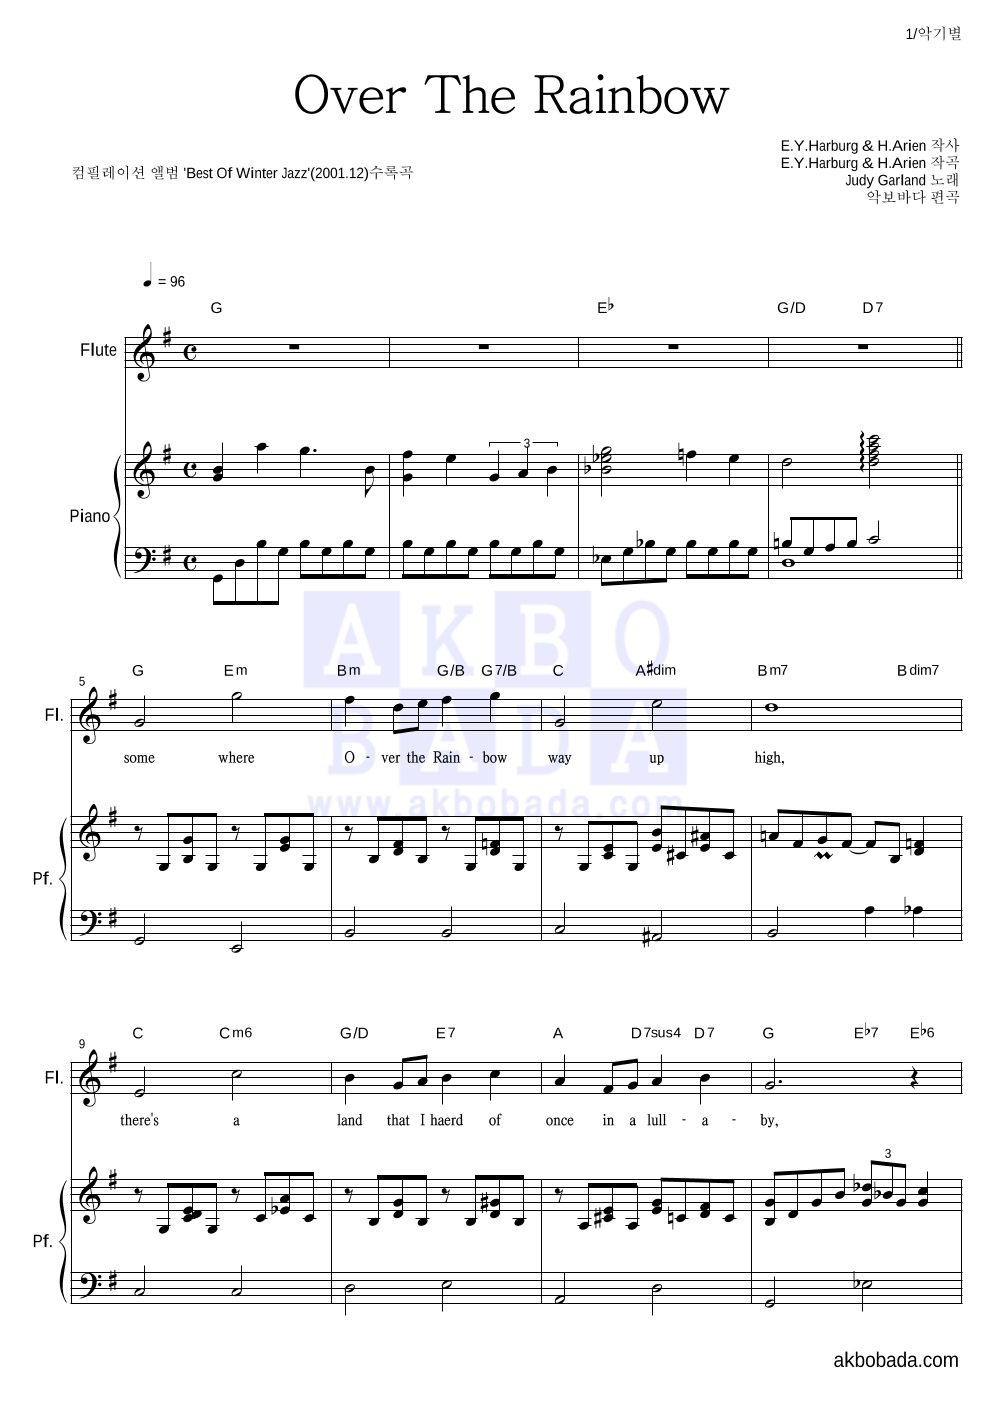 Judy Garland - Over The Rainbow (Best Of Winter Jazz Ver.) 플룻&피아노 악보 